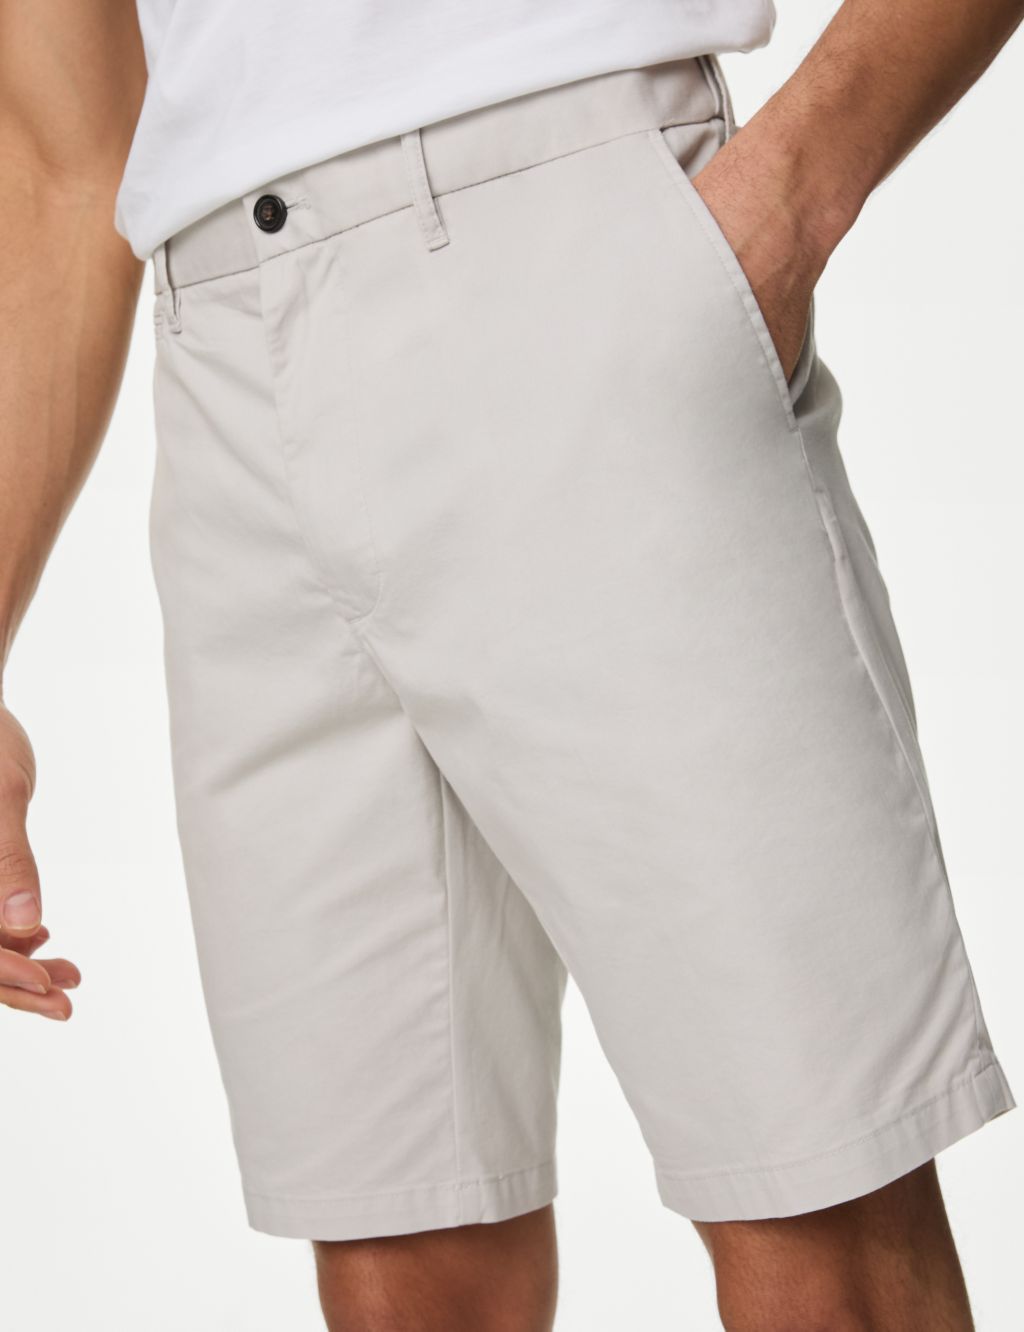 fontein Promotie oppervlakte Men's Beige Shorts | M&S